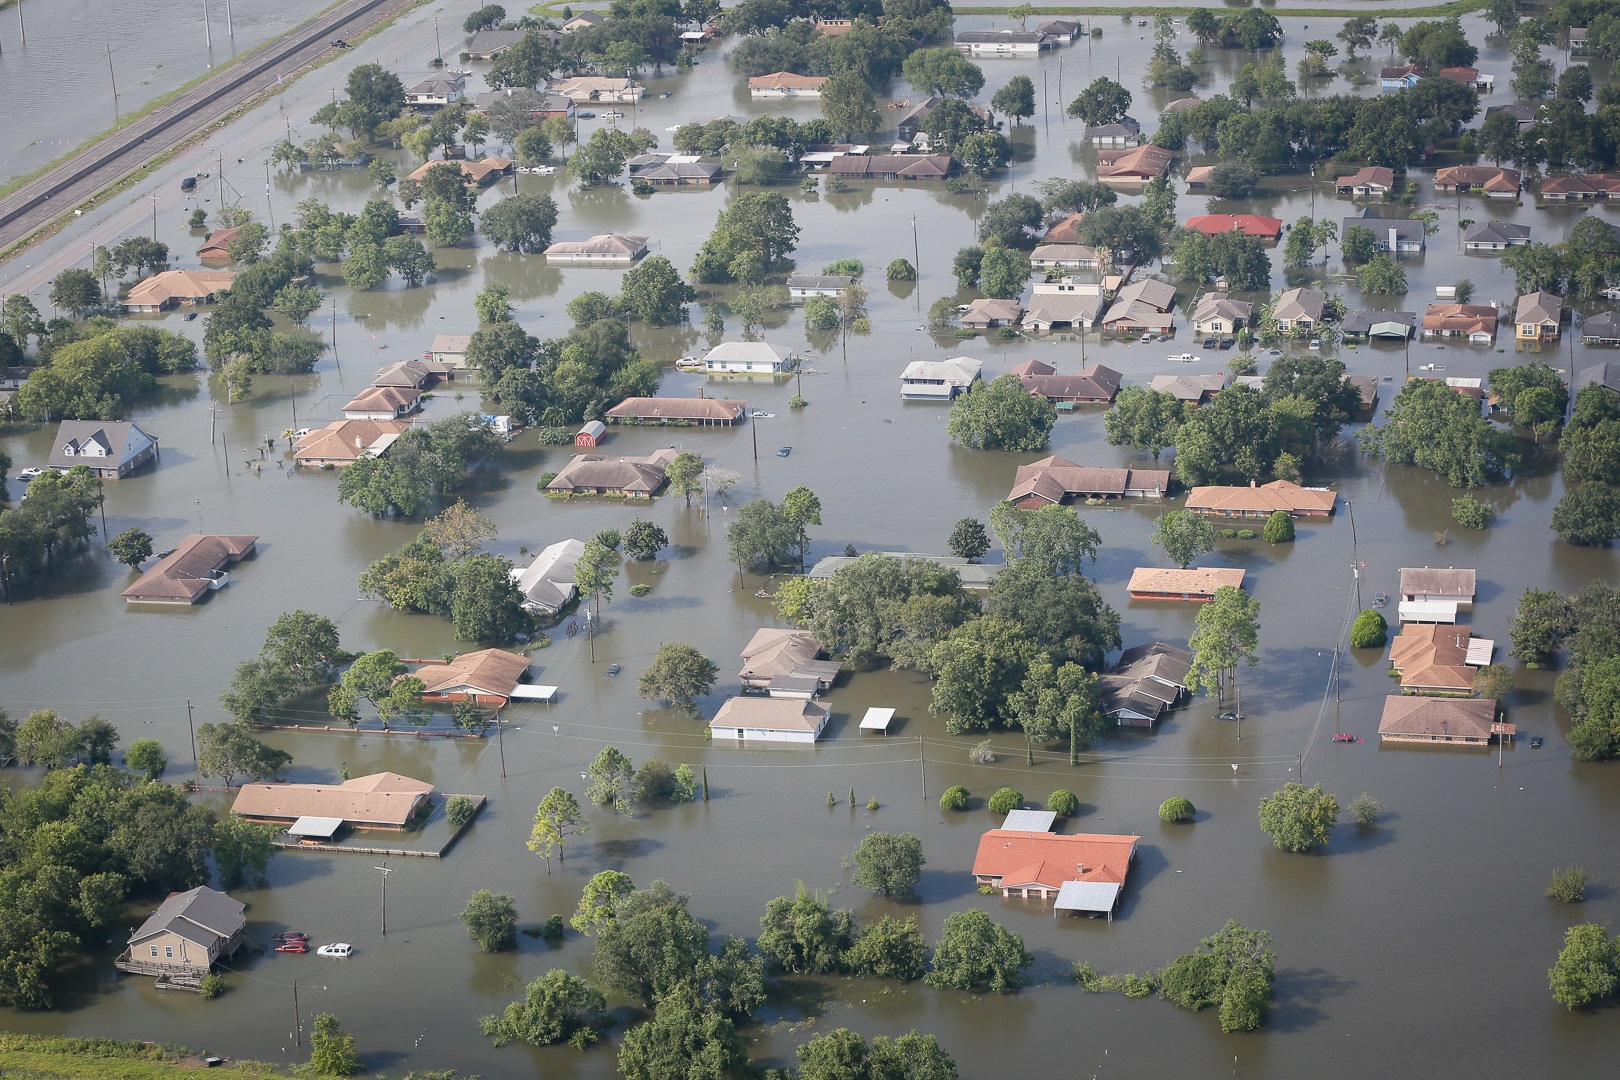 Flooding from Hurricane Harvey